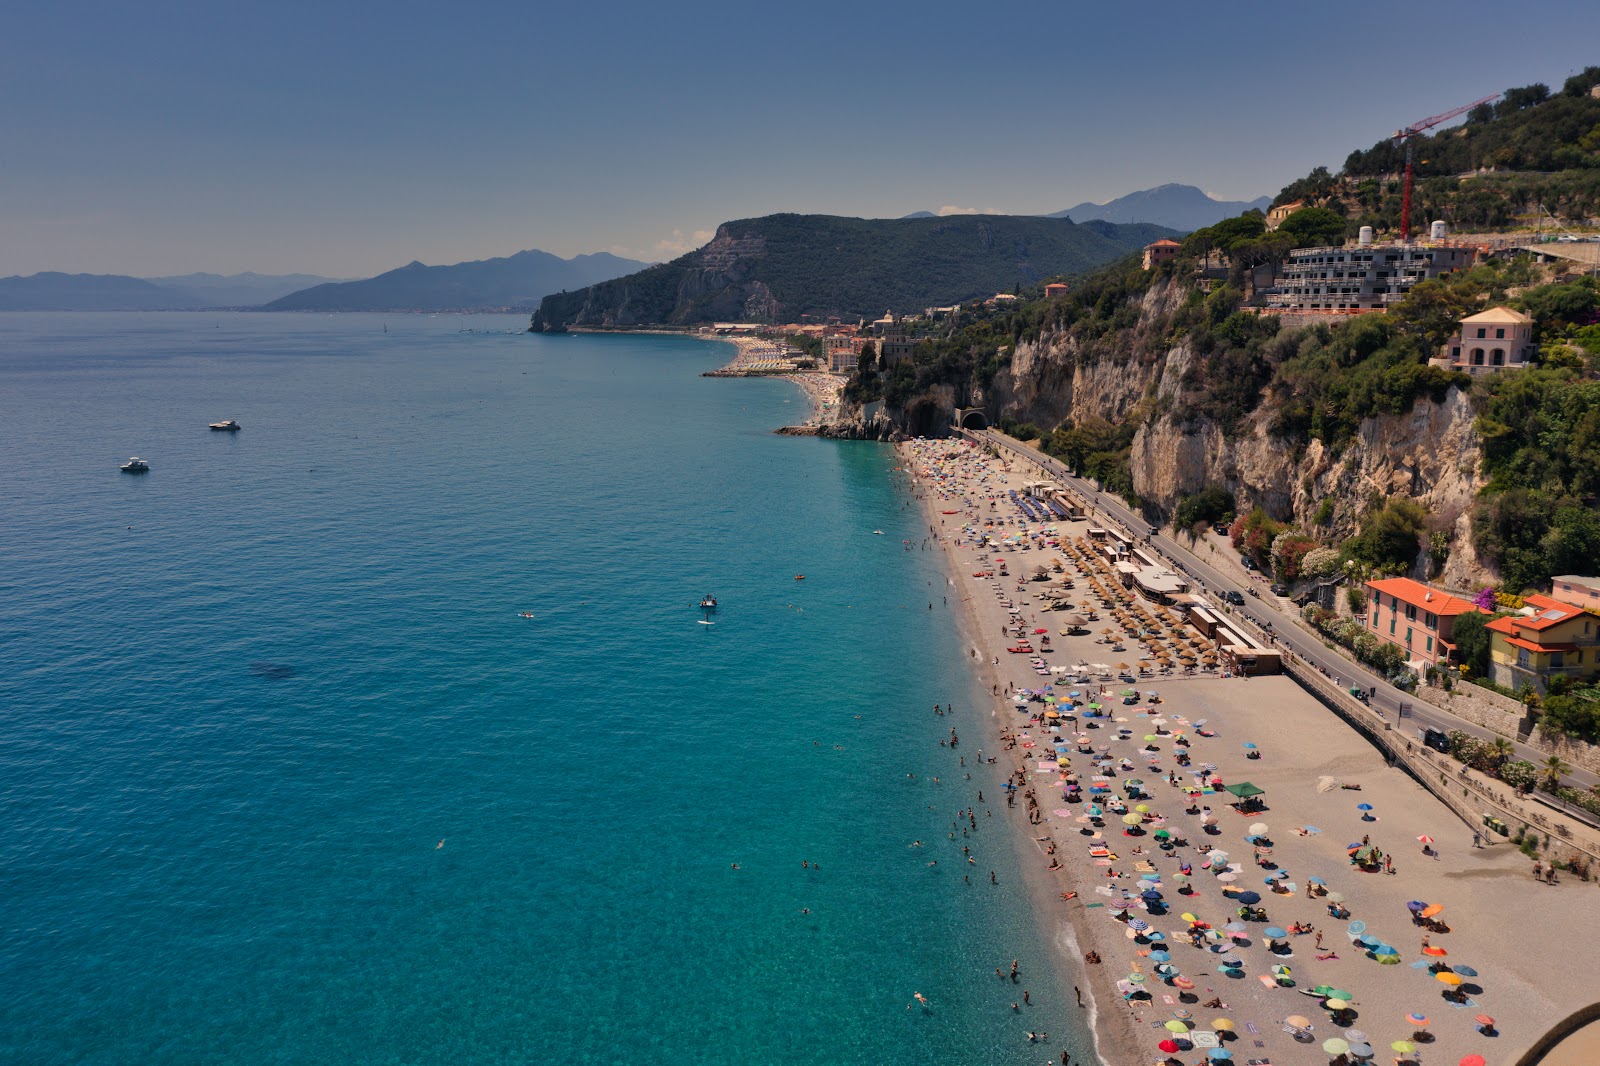 Photo of Spiaggia libera del Castelletto with blue pure water surface